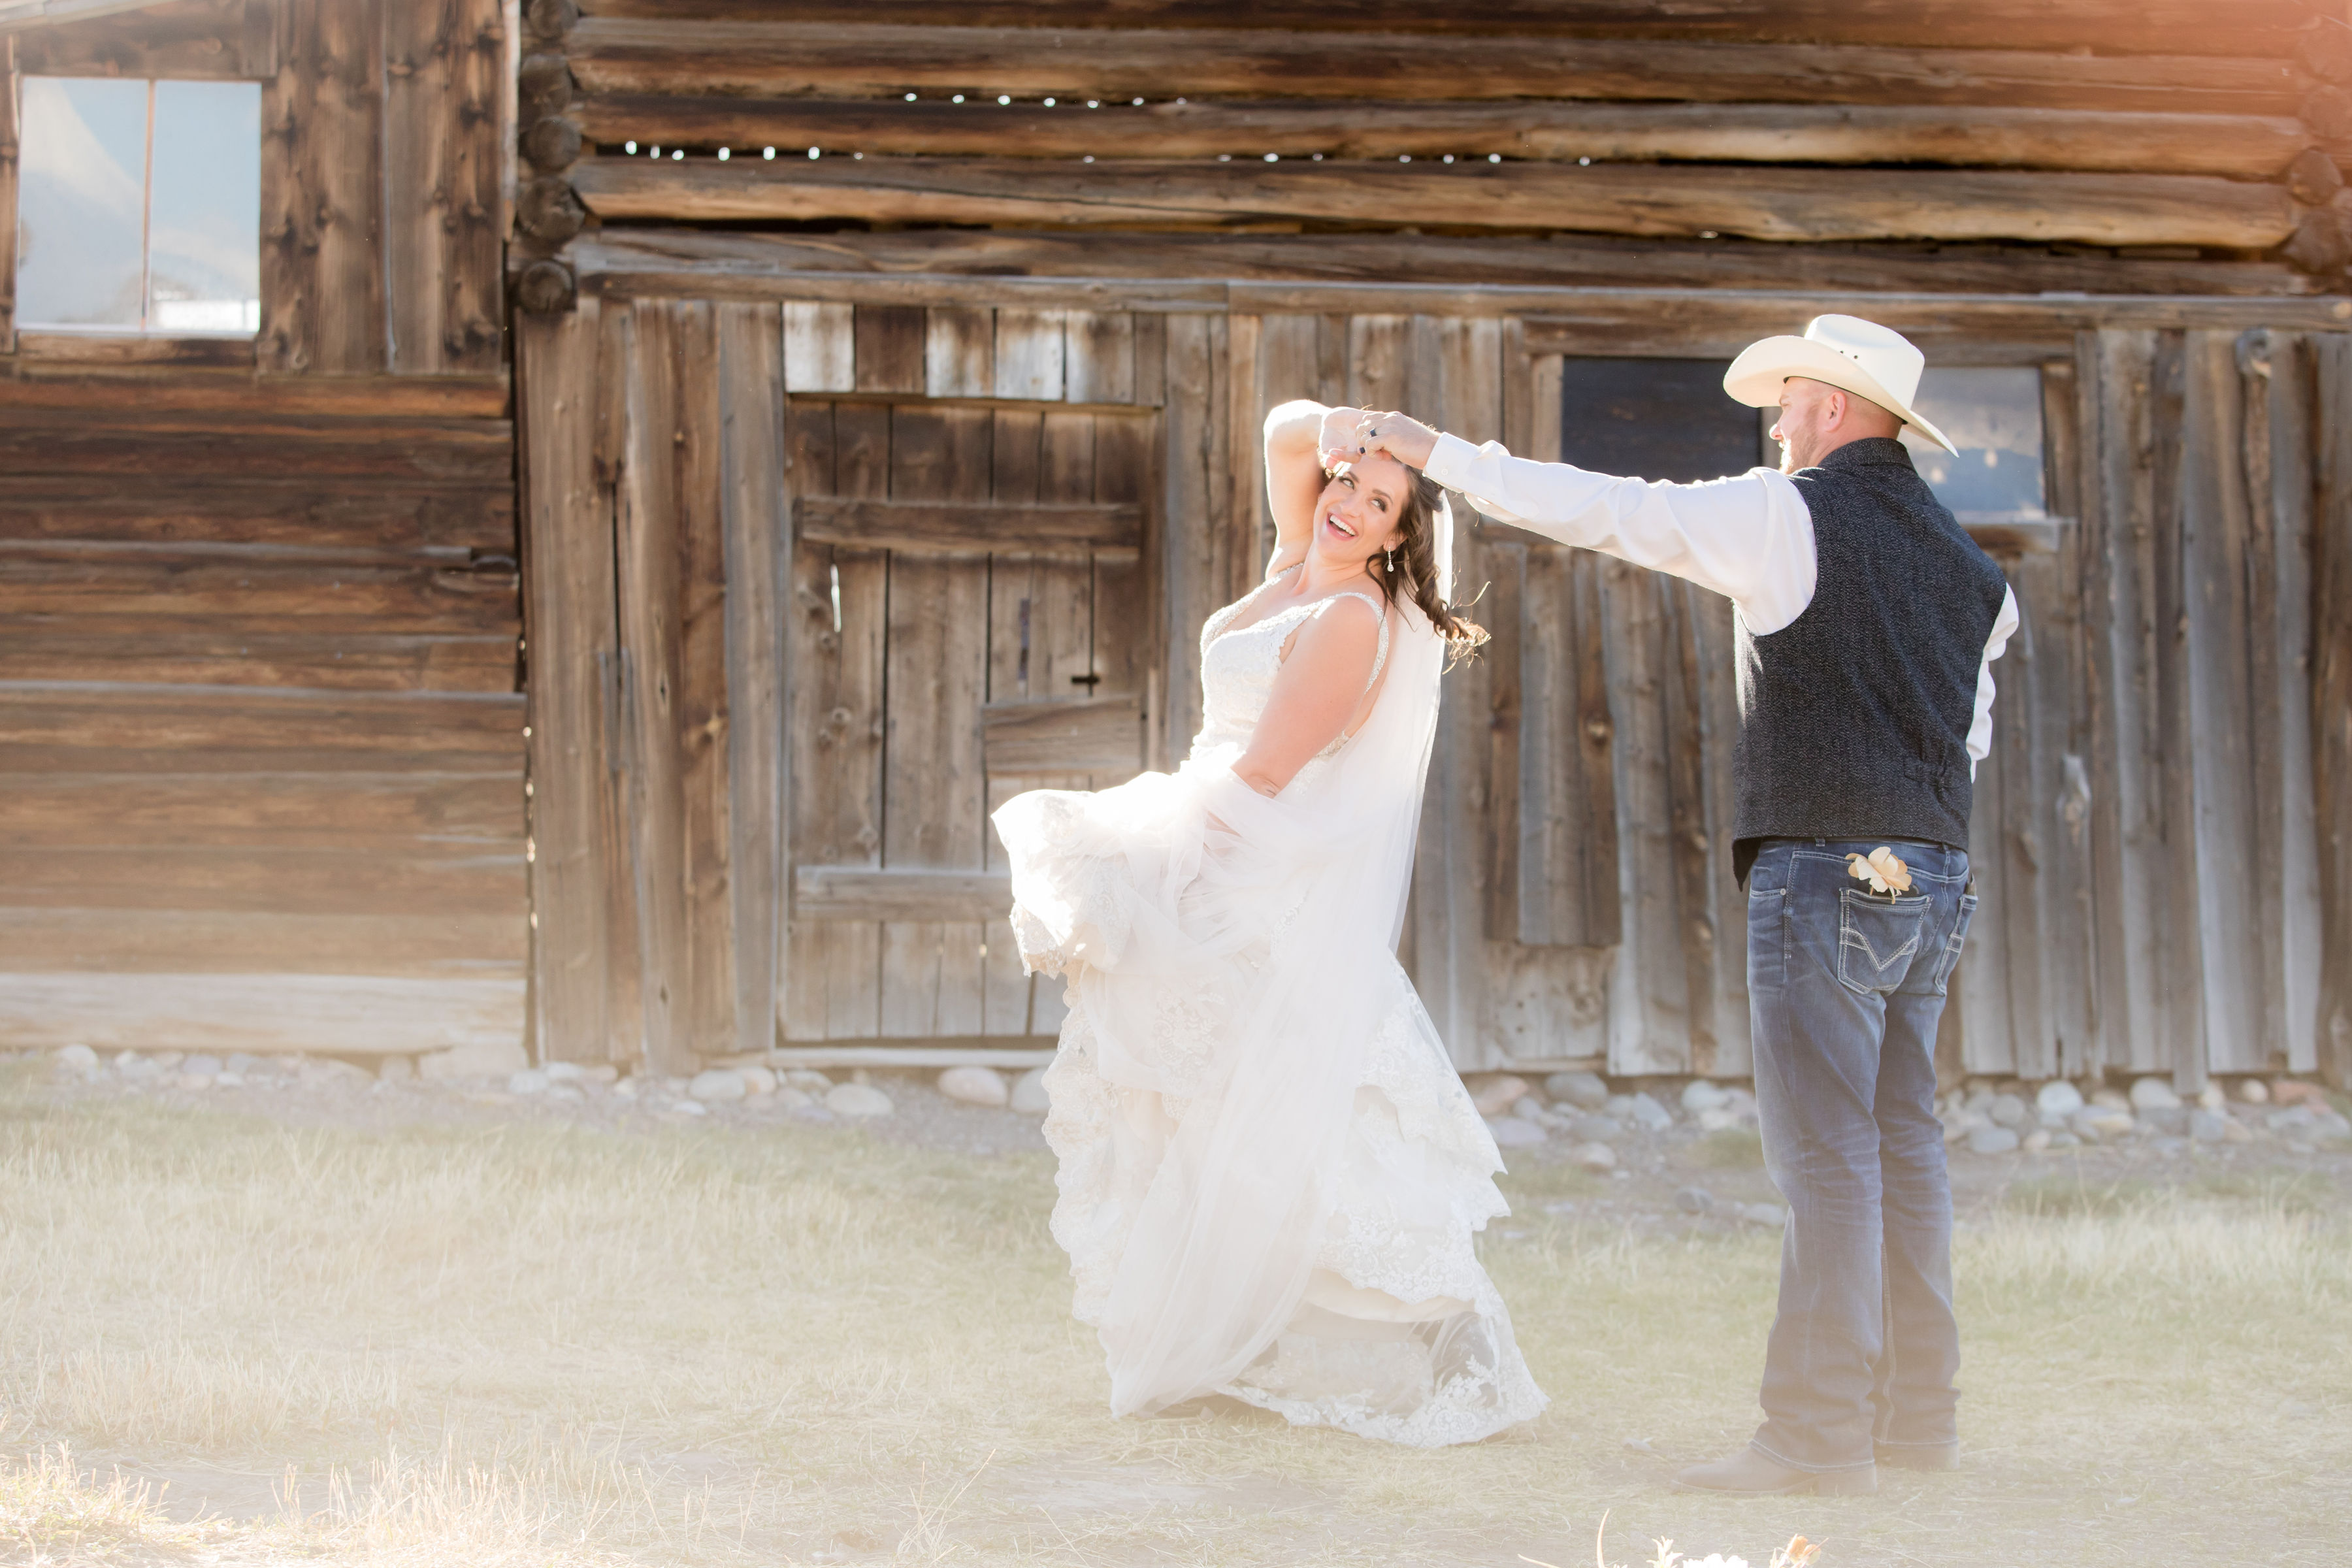 Fall weddings in Wyoming